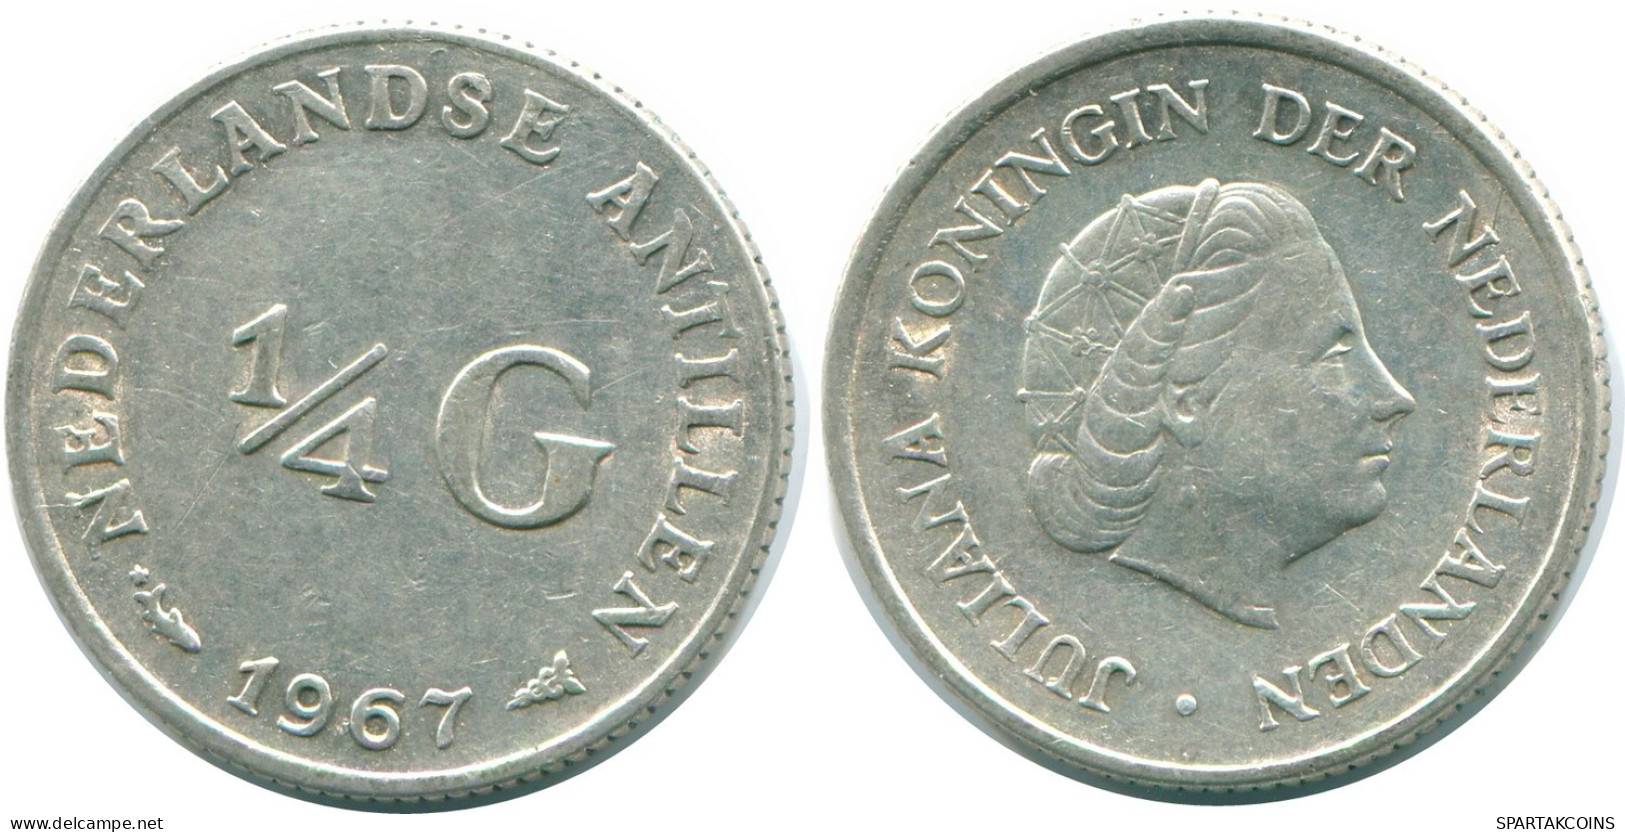 1/4 GULDEN 1967 NETHERLANDS ANTILLES SILVER Colonial Coin #NL11450.4.U.A - Niederländische Antillen